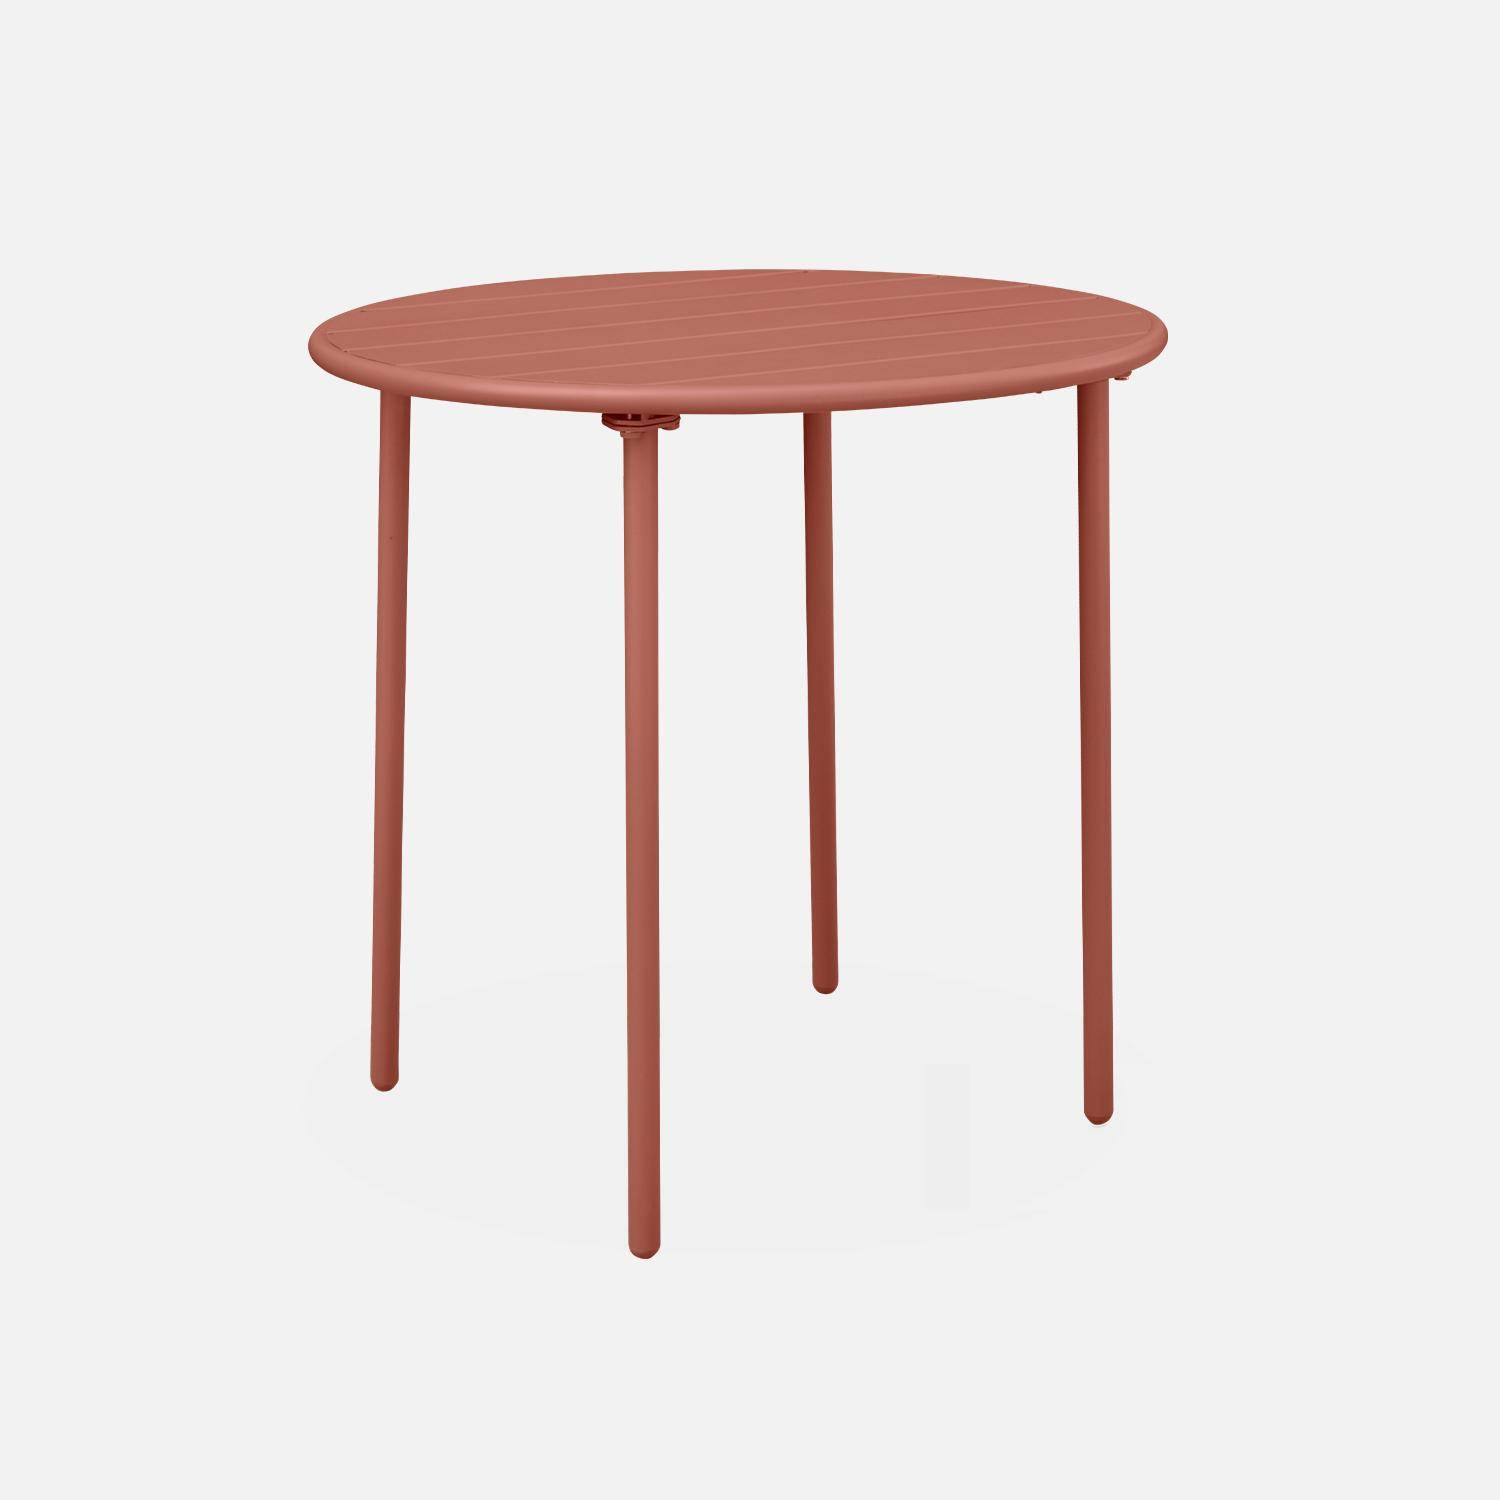 2-seater round steel garden table, 75cm, Terracotta Photo5